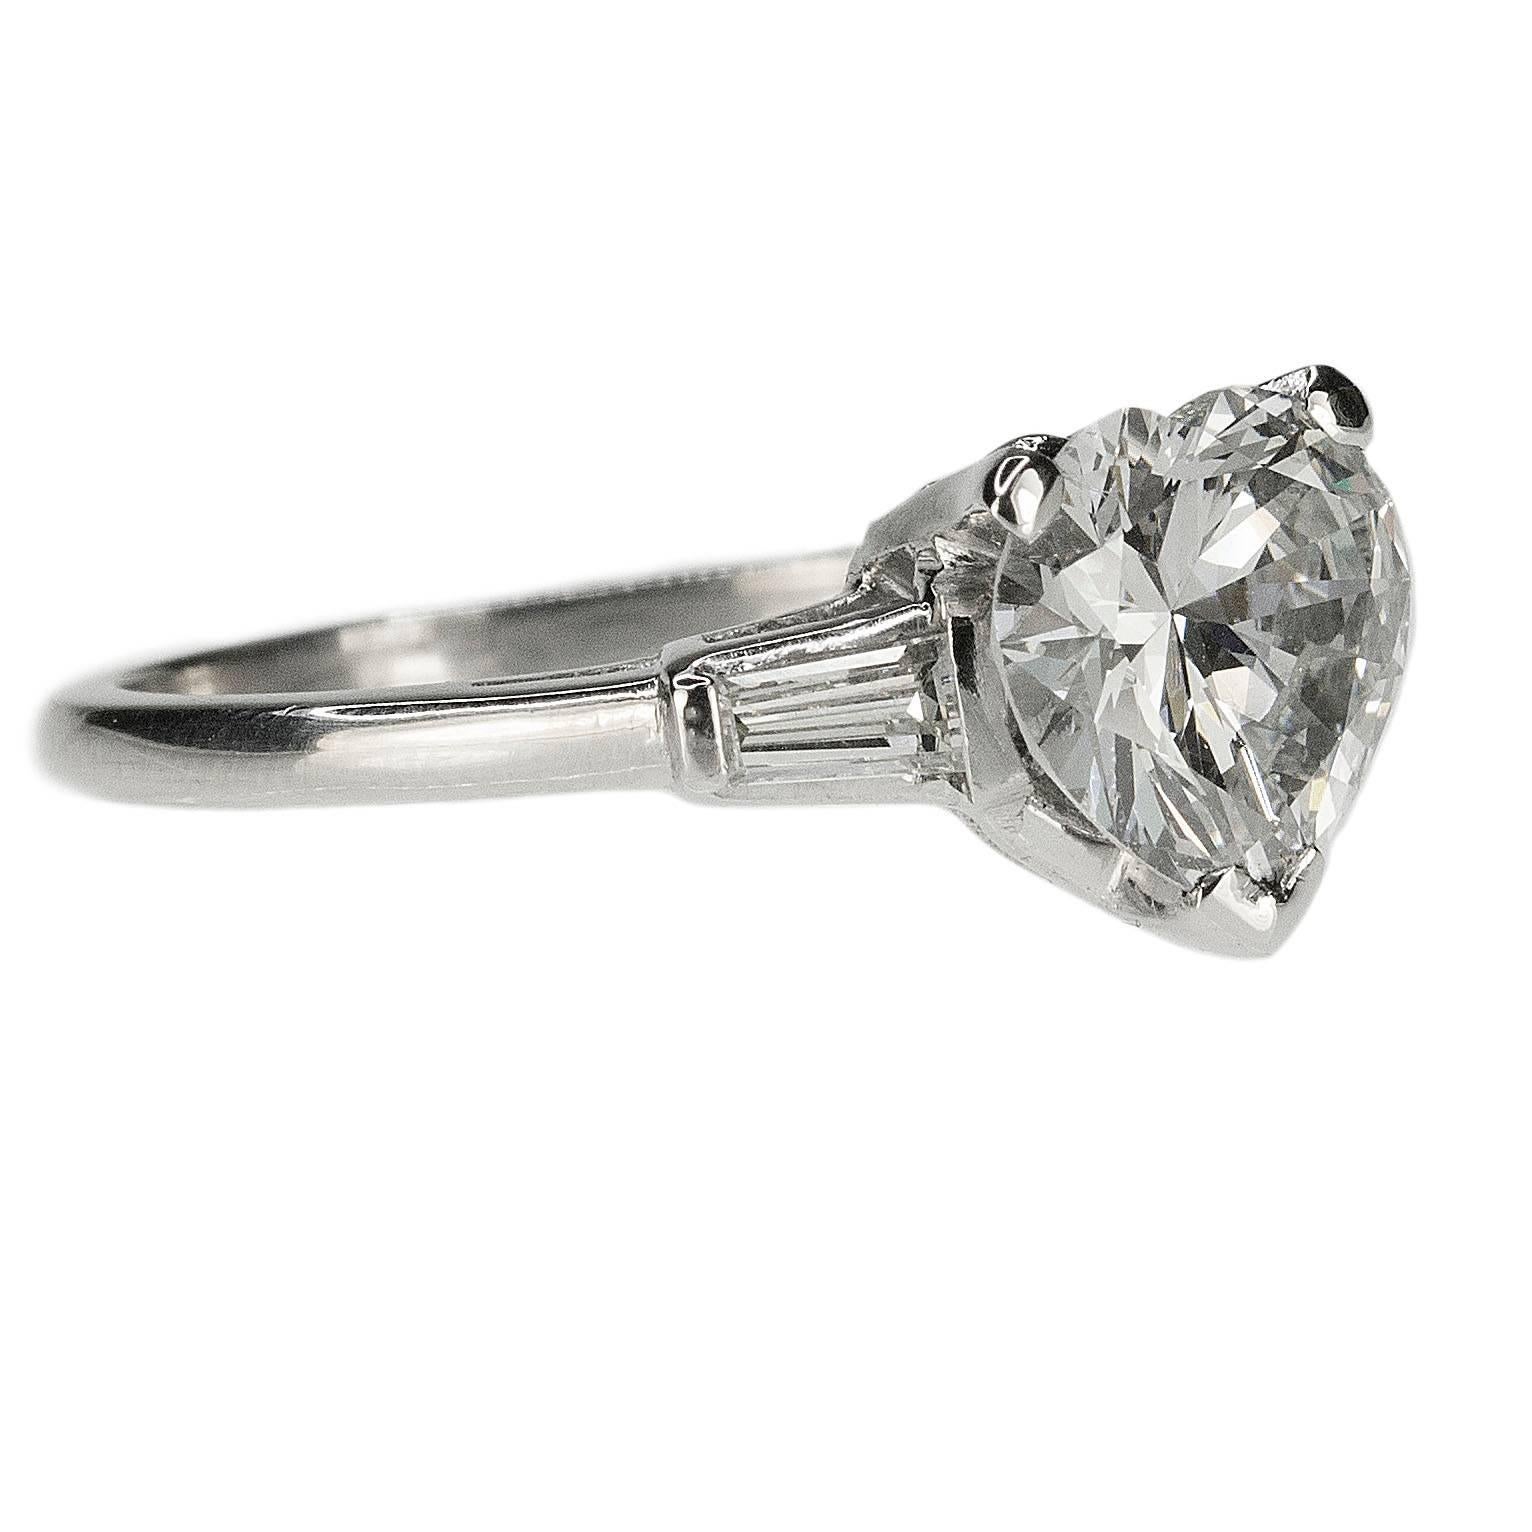 Heart Cut GIA 2.52 Carat Heart Shape Diamond in Platinum Ring